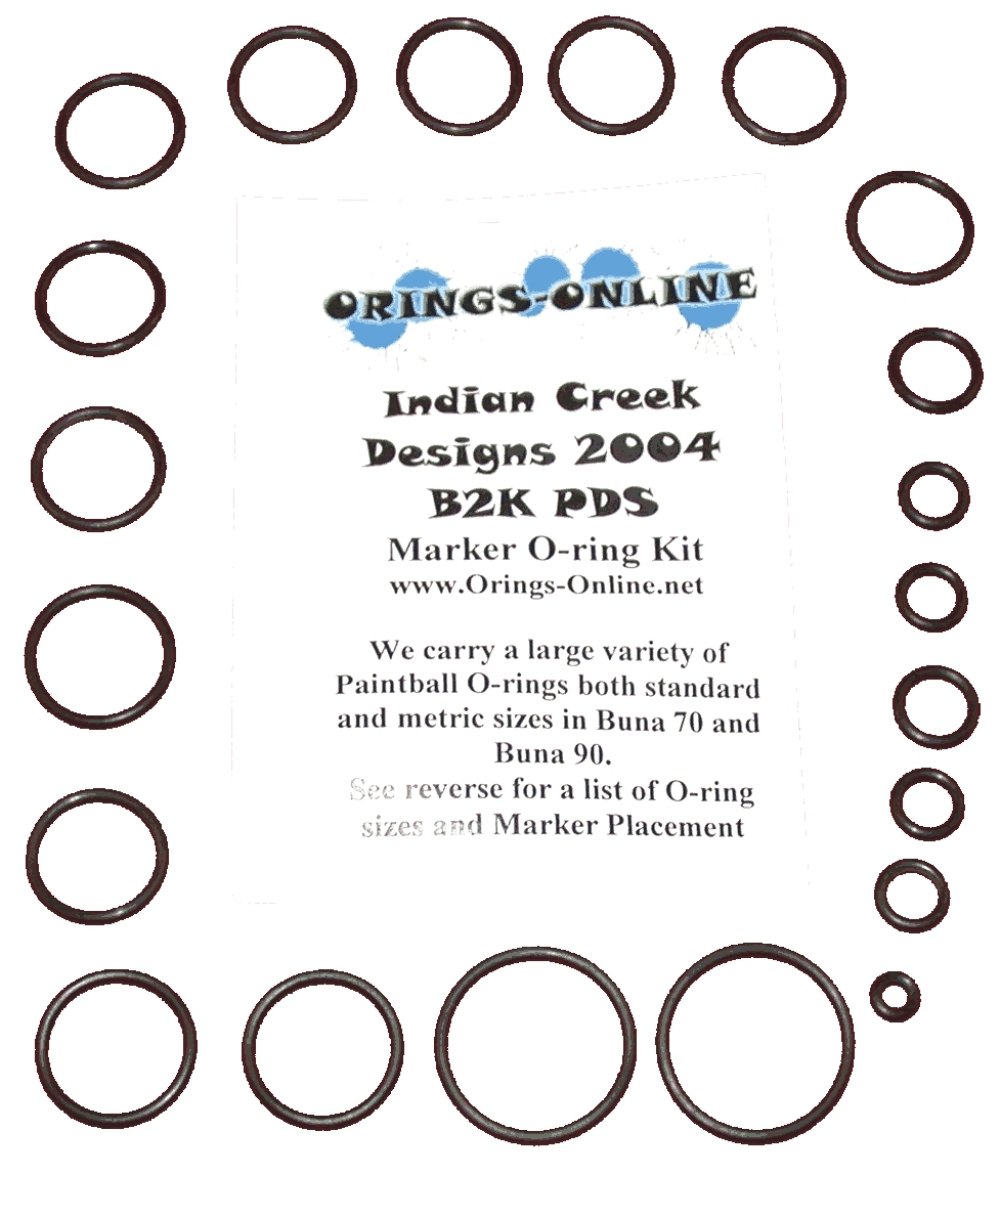 Indian Creek 2004 B2K PDS Marker O-ring Kit